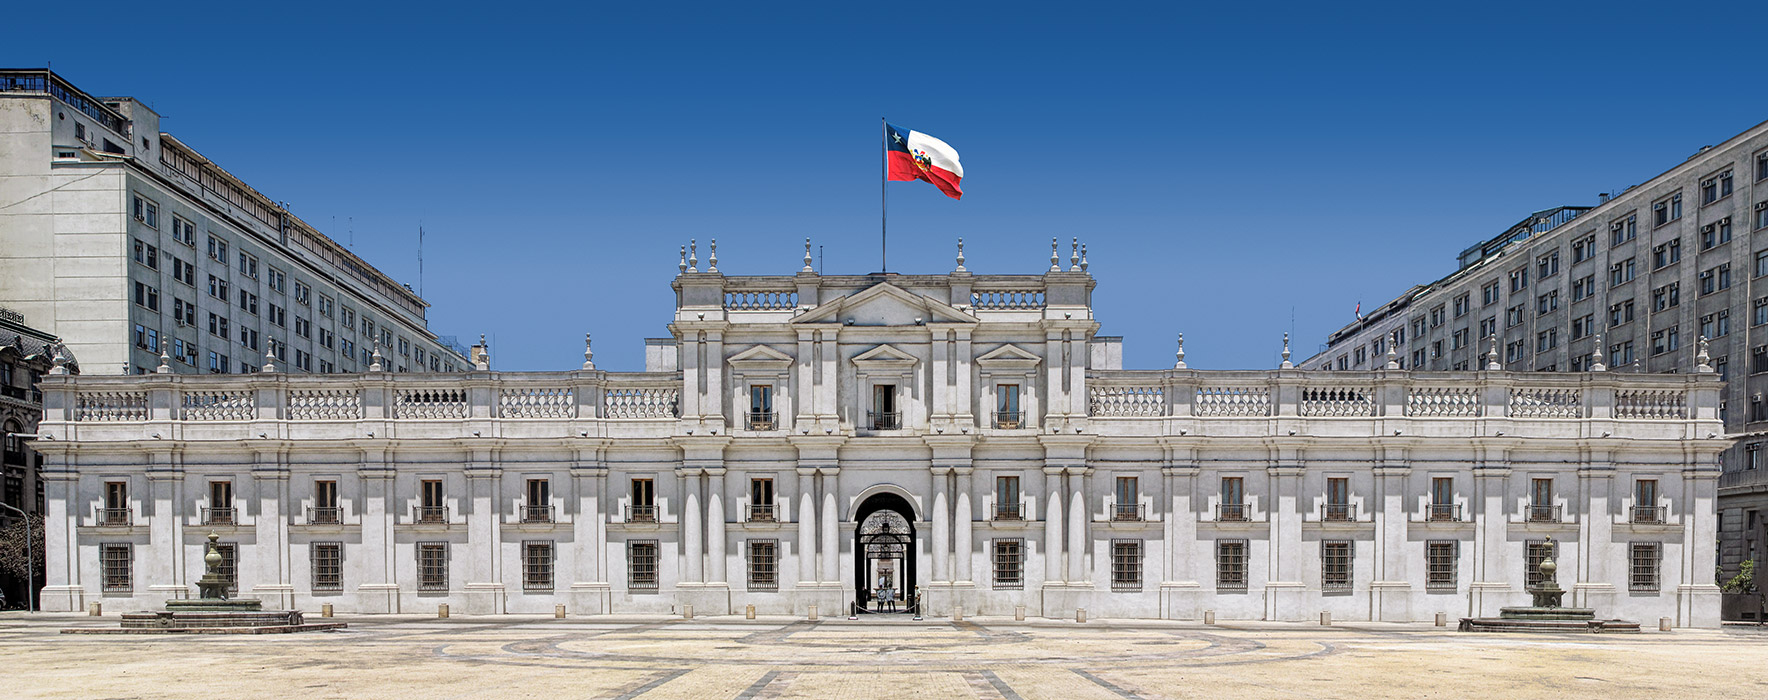 Chile - Santiago La Moneda